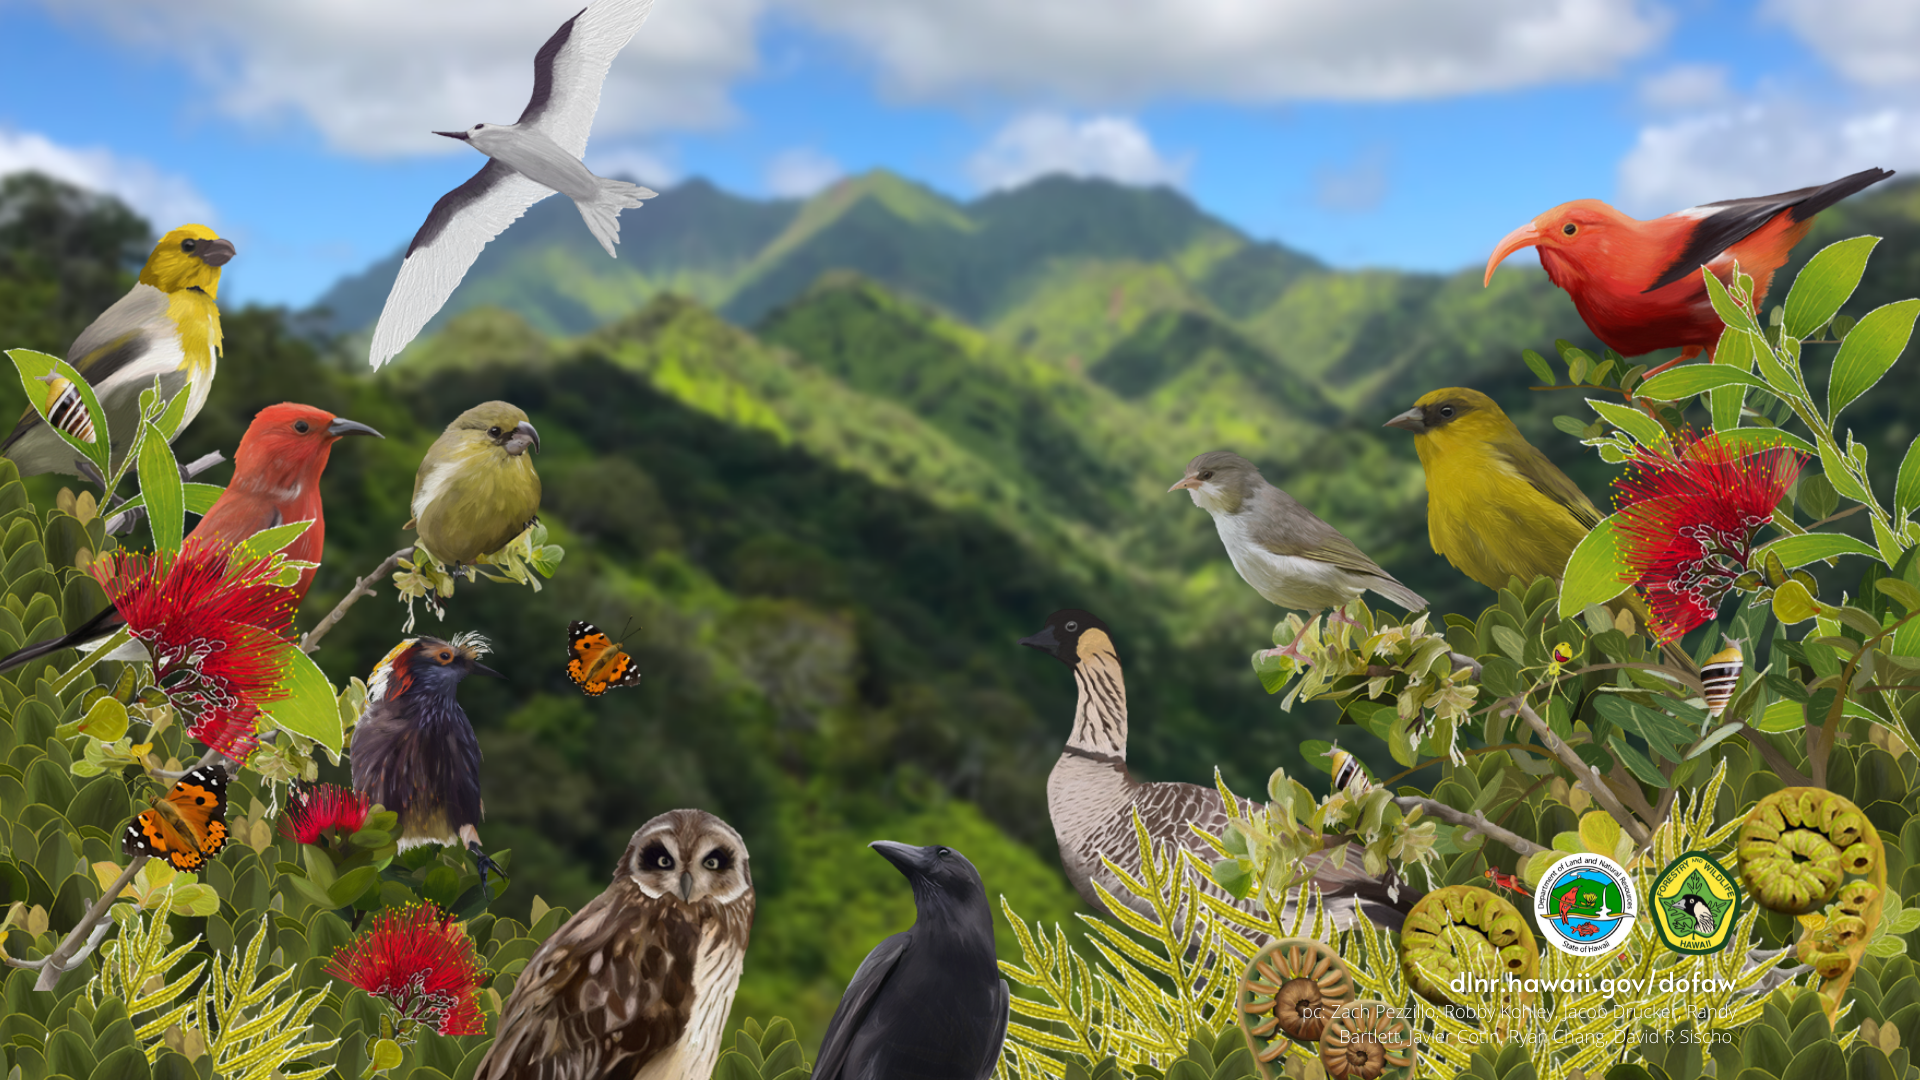 Hawaiʻi birds, plants, insects wallpaper